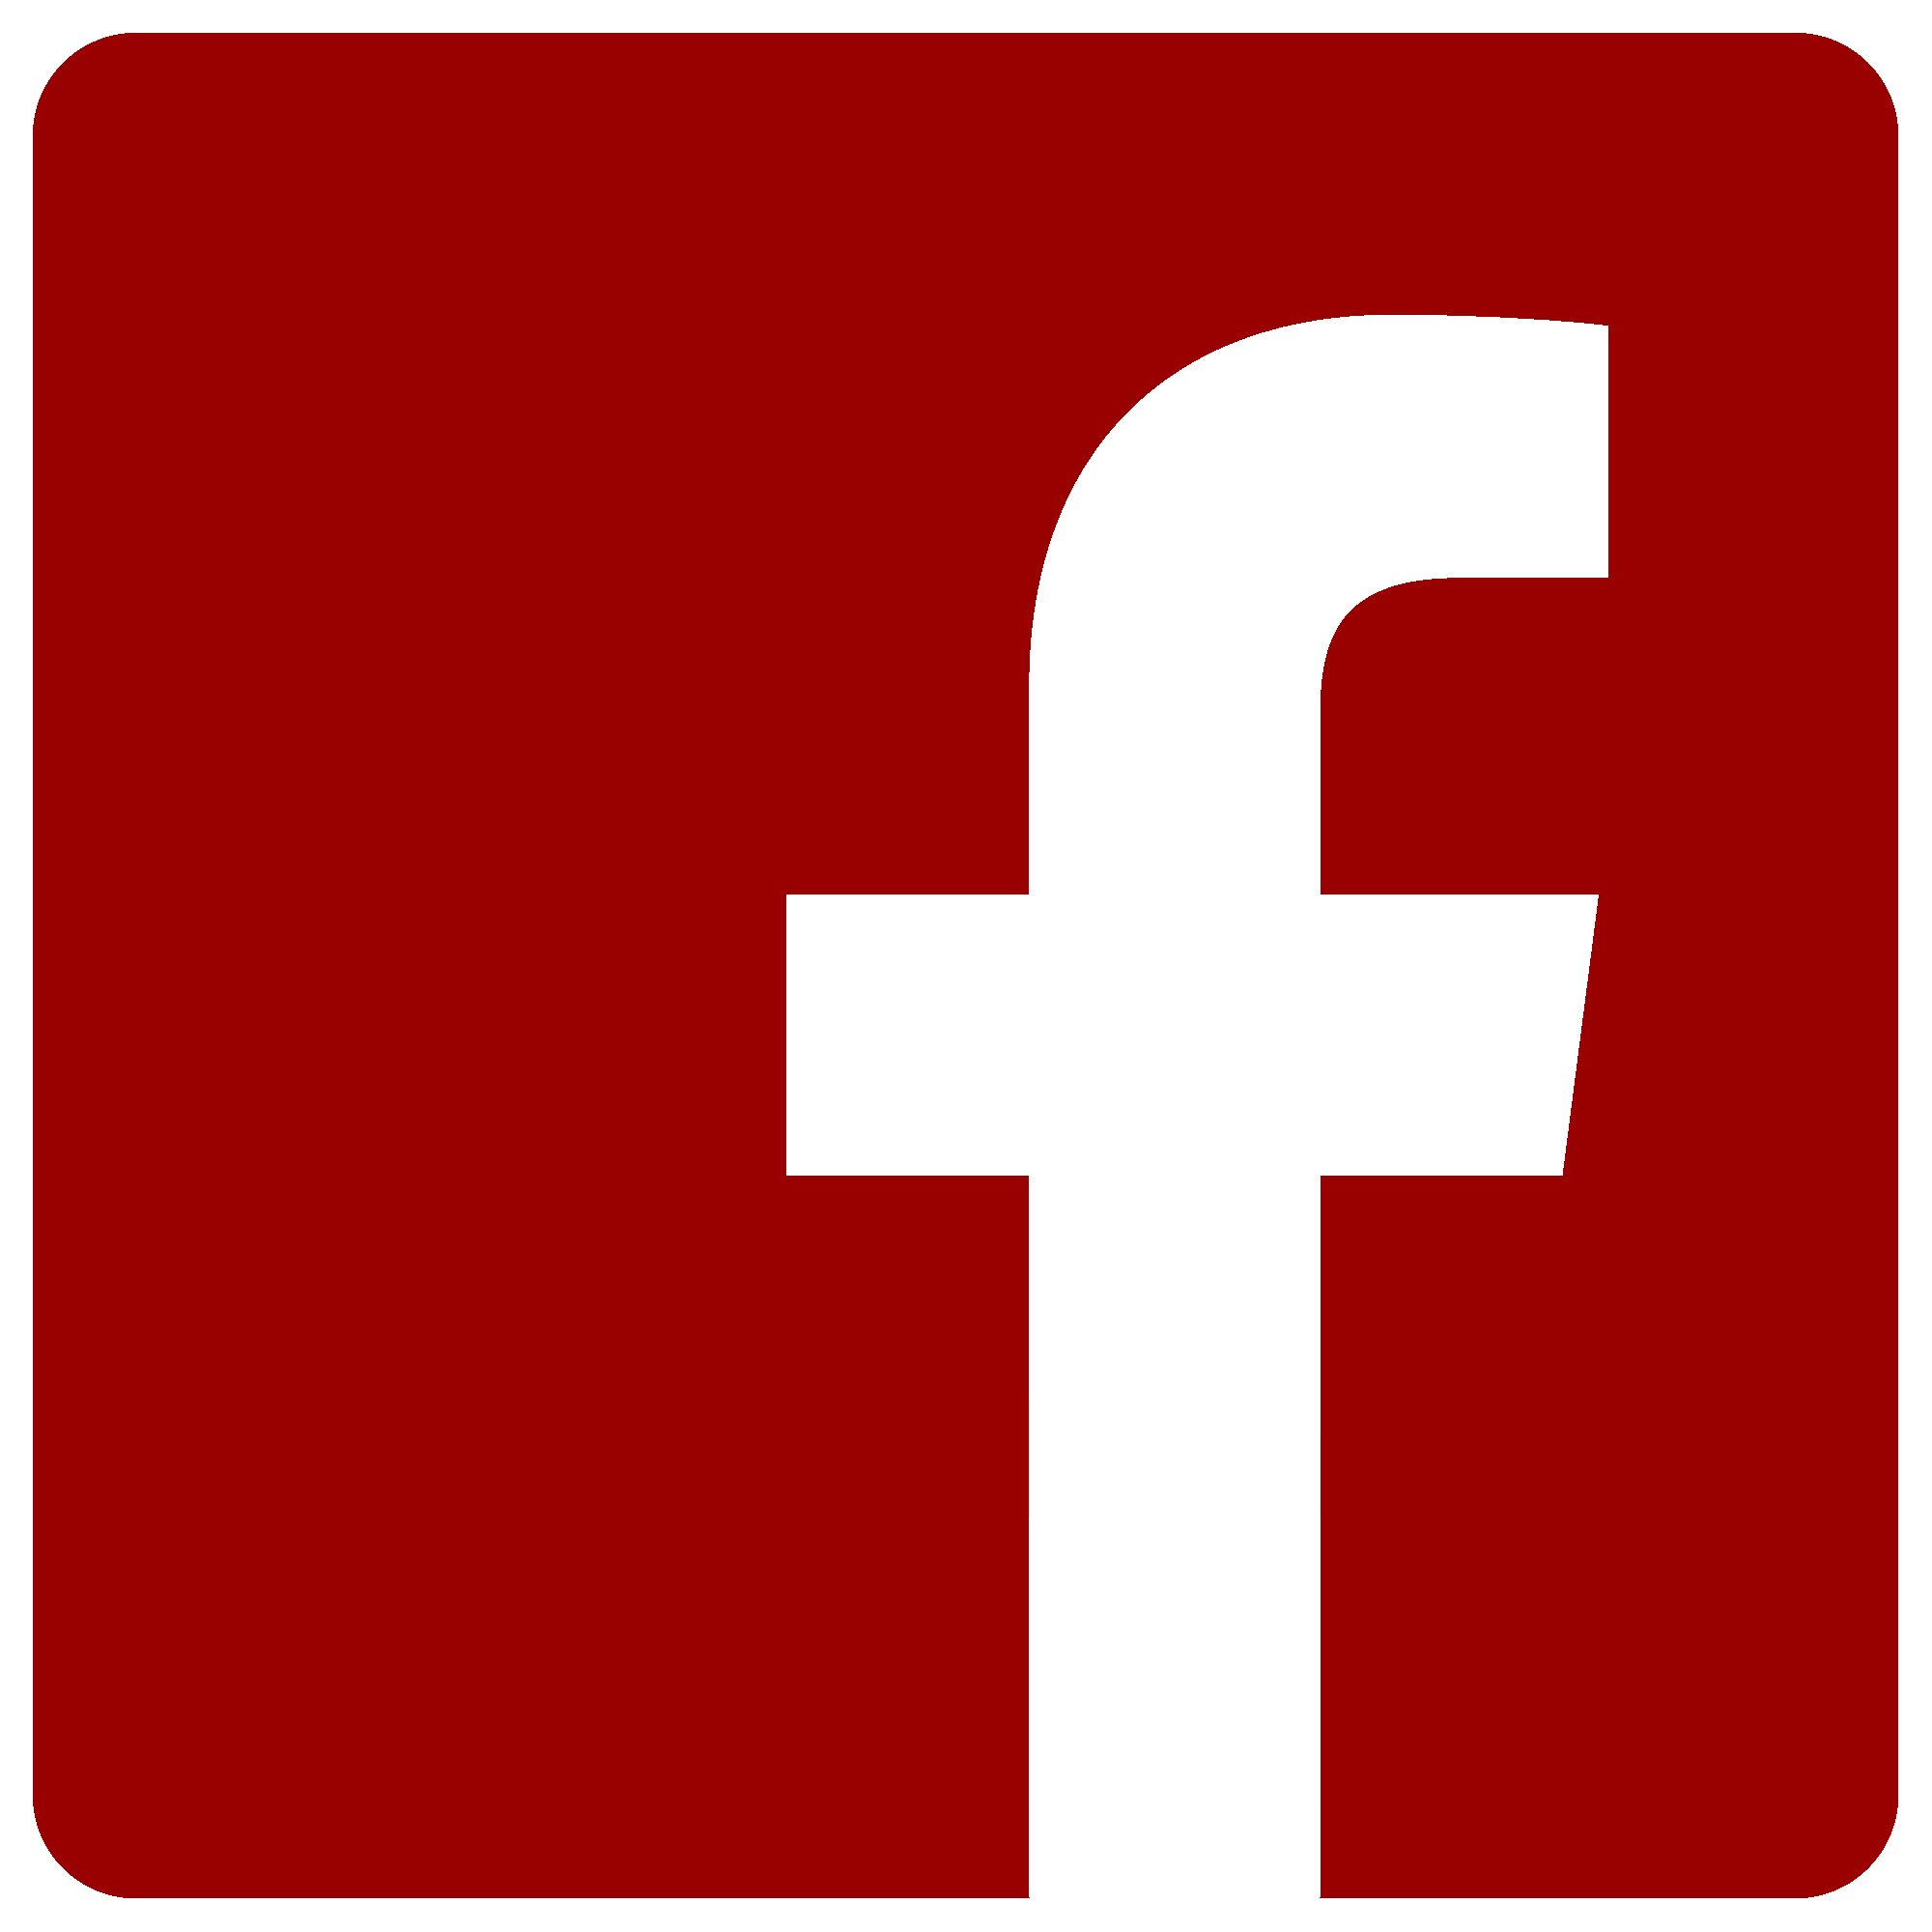 Original Facebook Logo - File:Facebook-logo-red.png - Wikimedia Commons